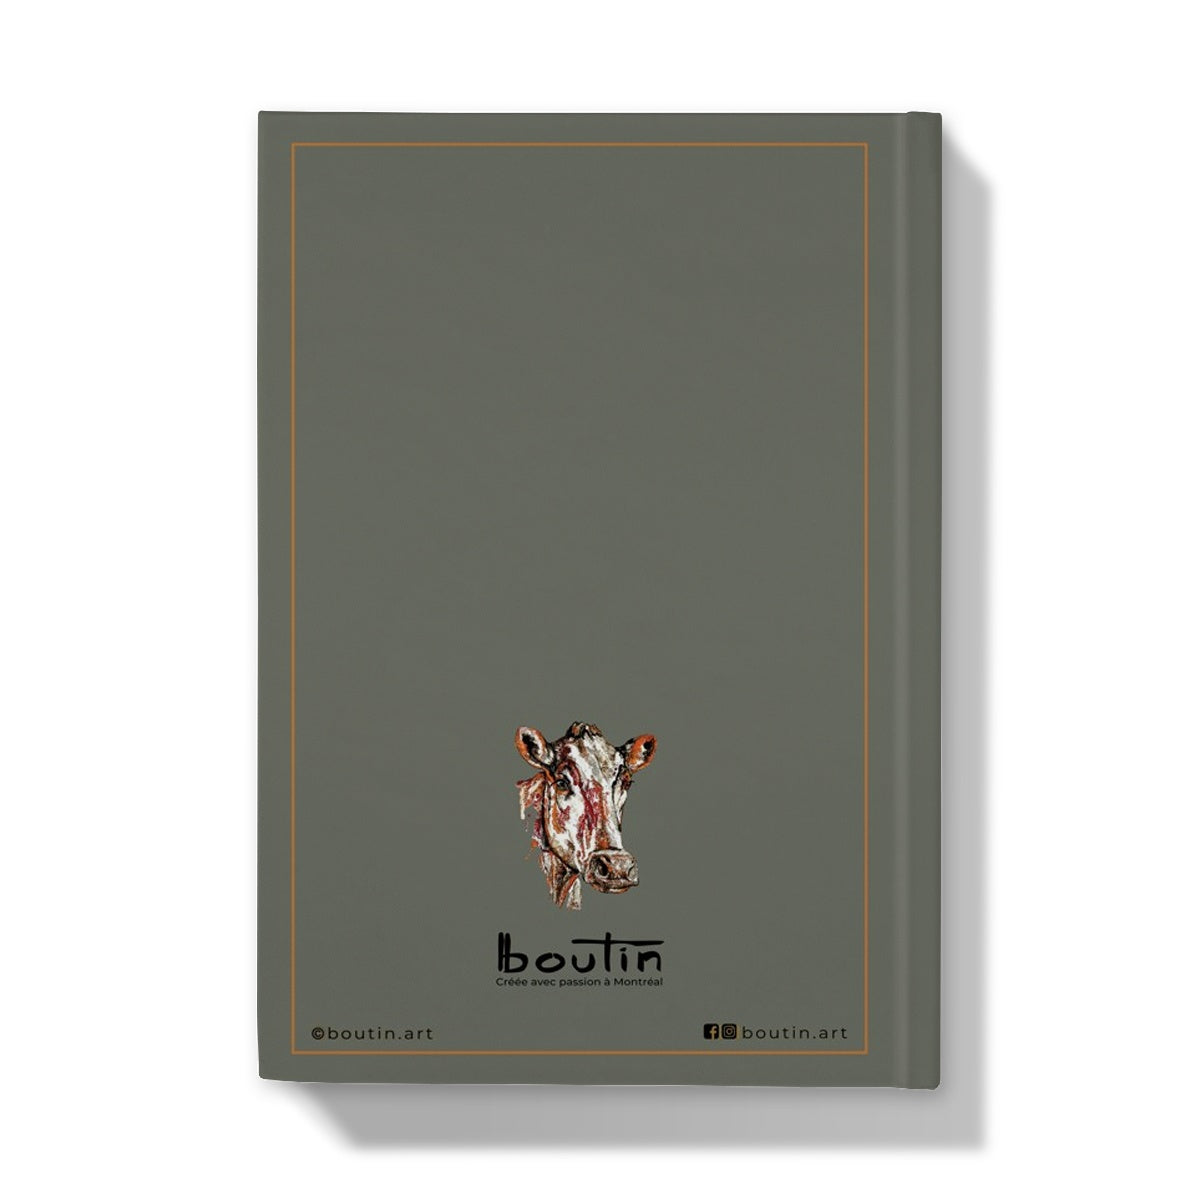 Betty moss - Notebook by the artist Boutin